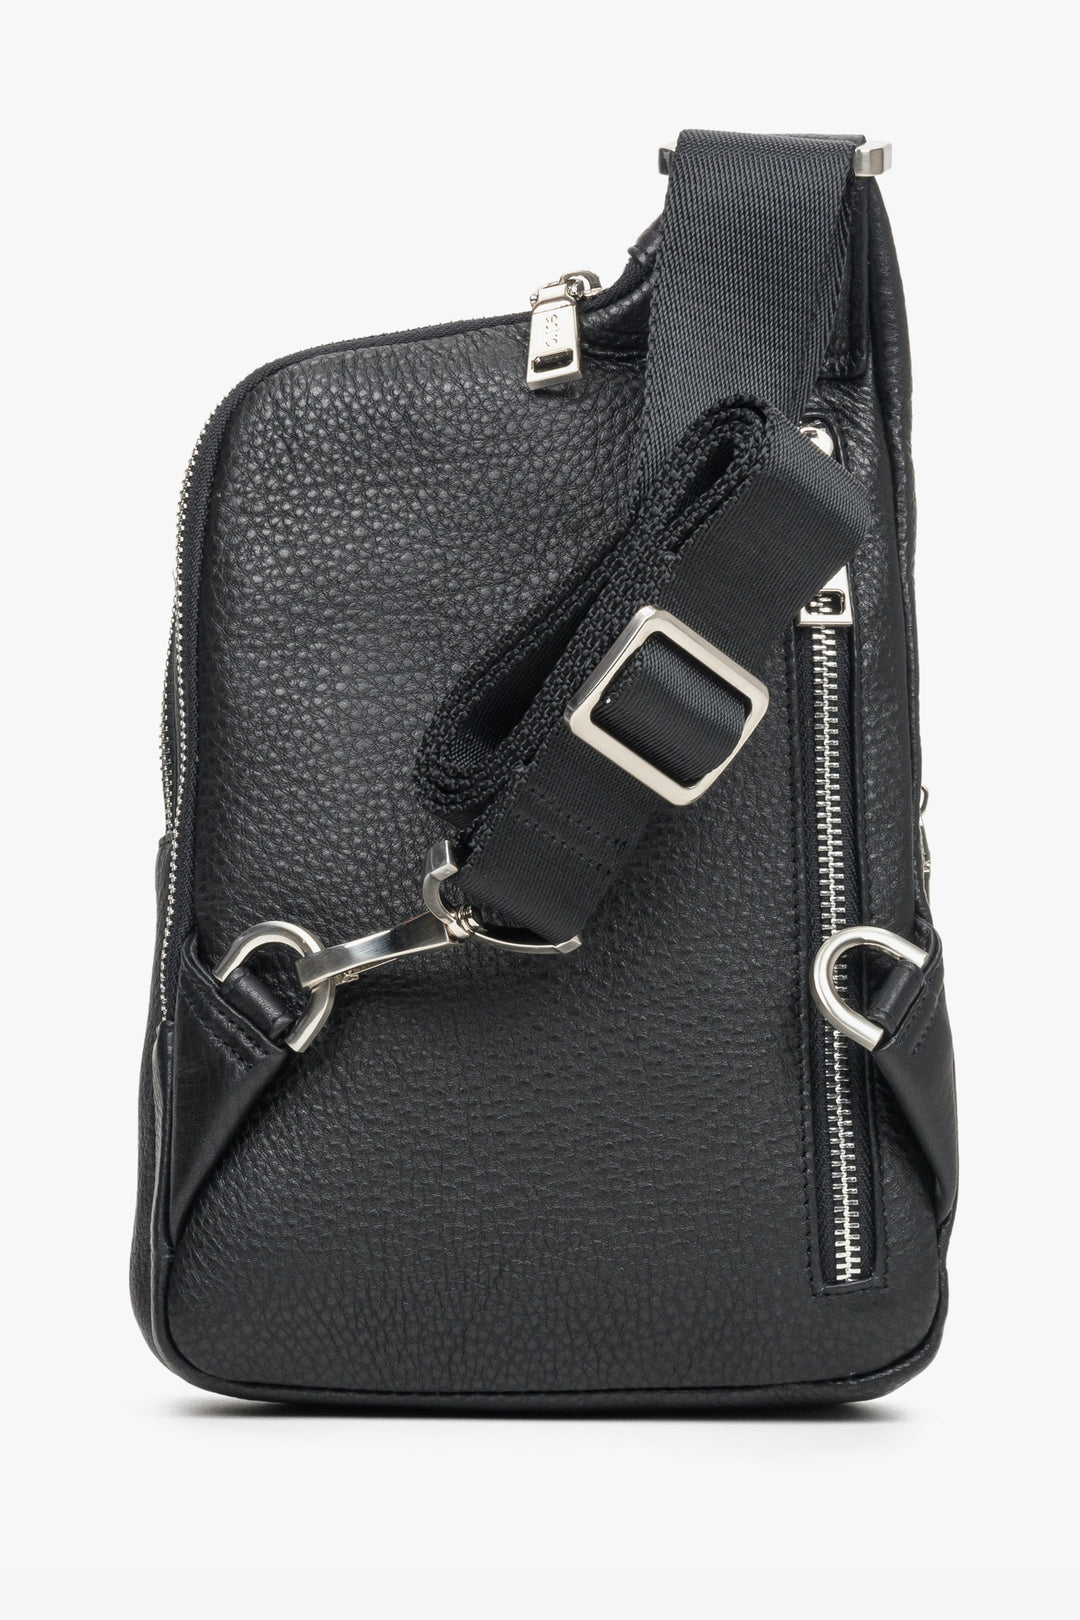 Men's black leather pouch by Estro - back view.